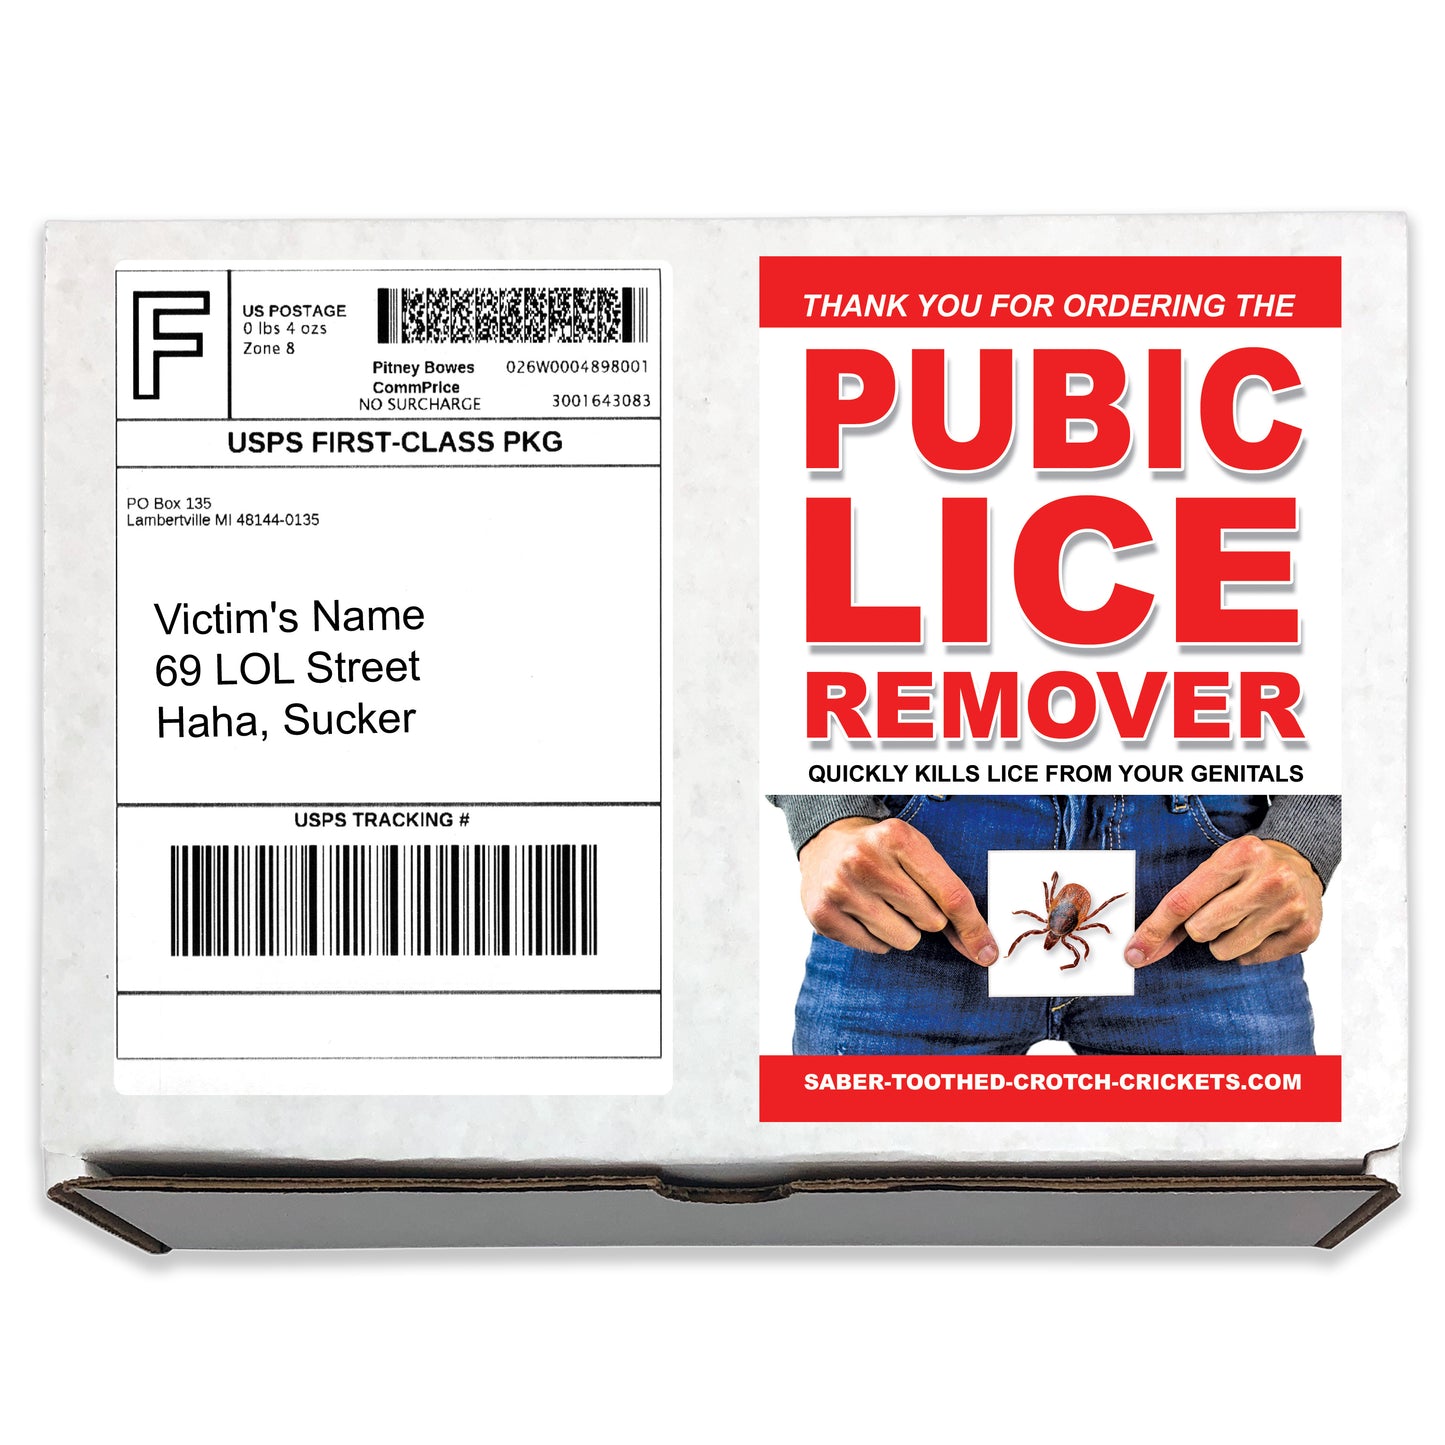 Pubic Lice Remover embarrassing prank box